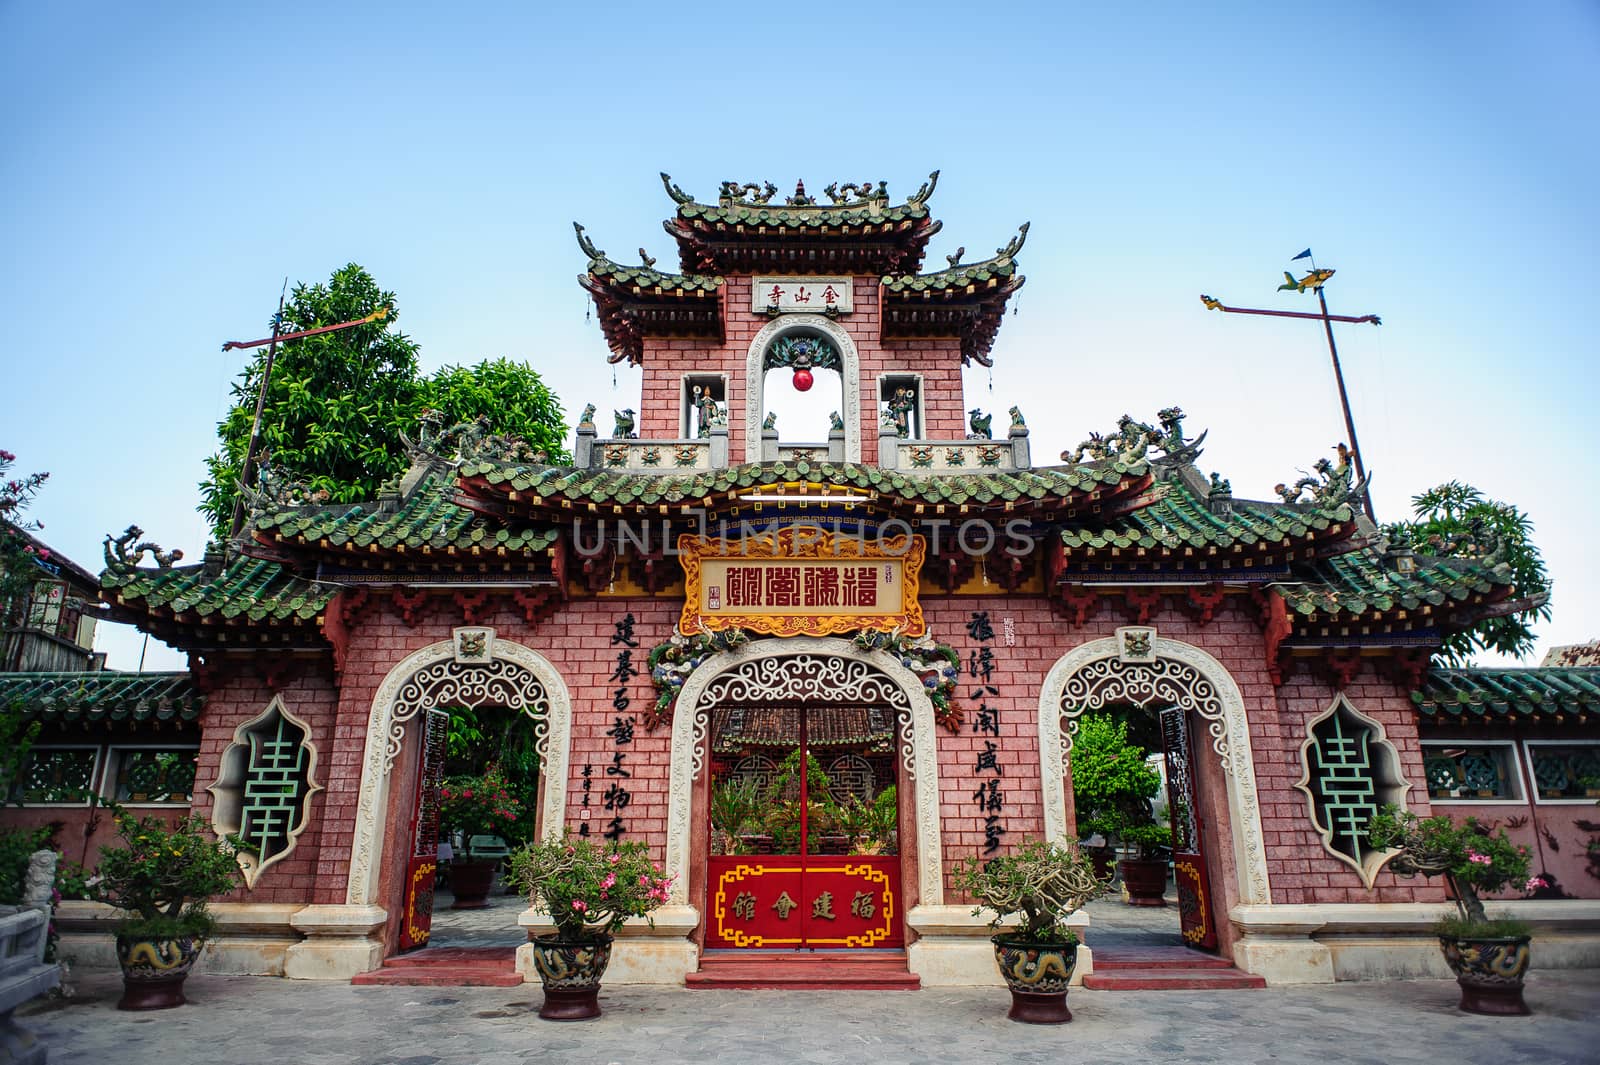 Fujian Assembly hall - Hoi An - Quang Nam - Central Vietnam by Komngui